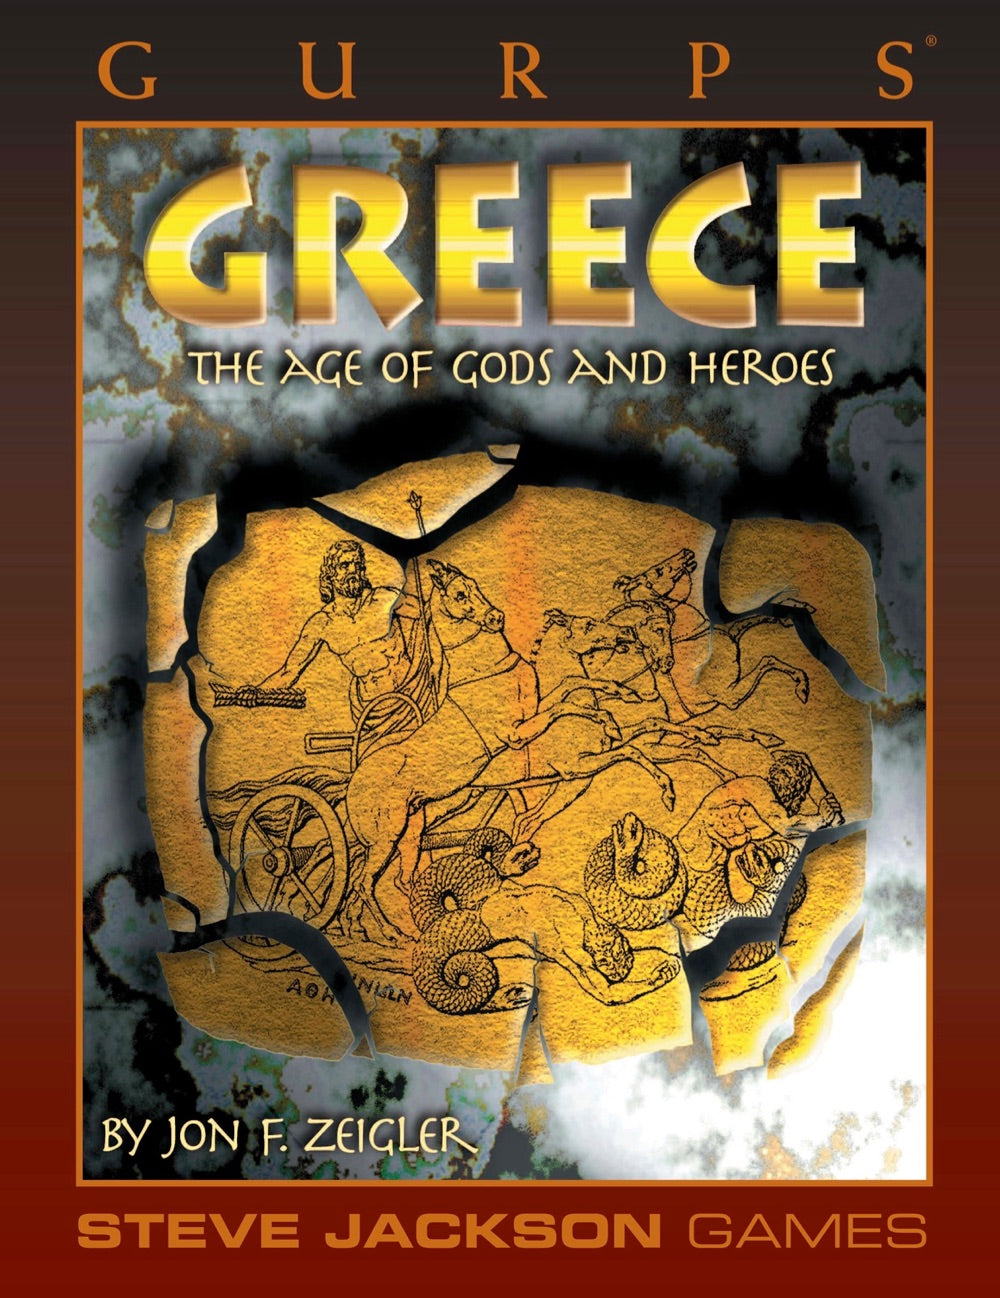 GURPS Classic: Greece